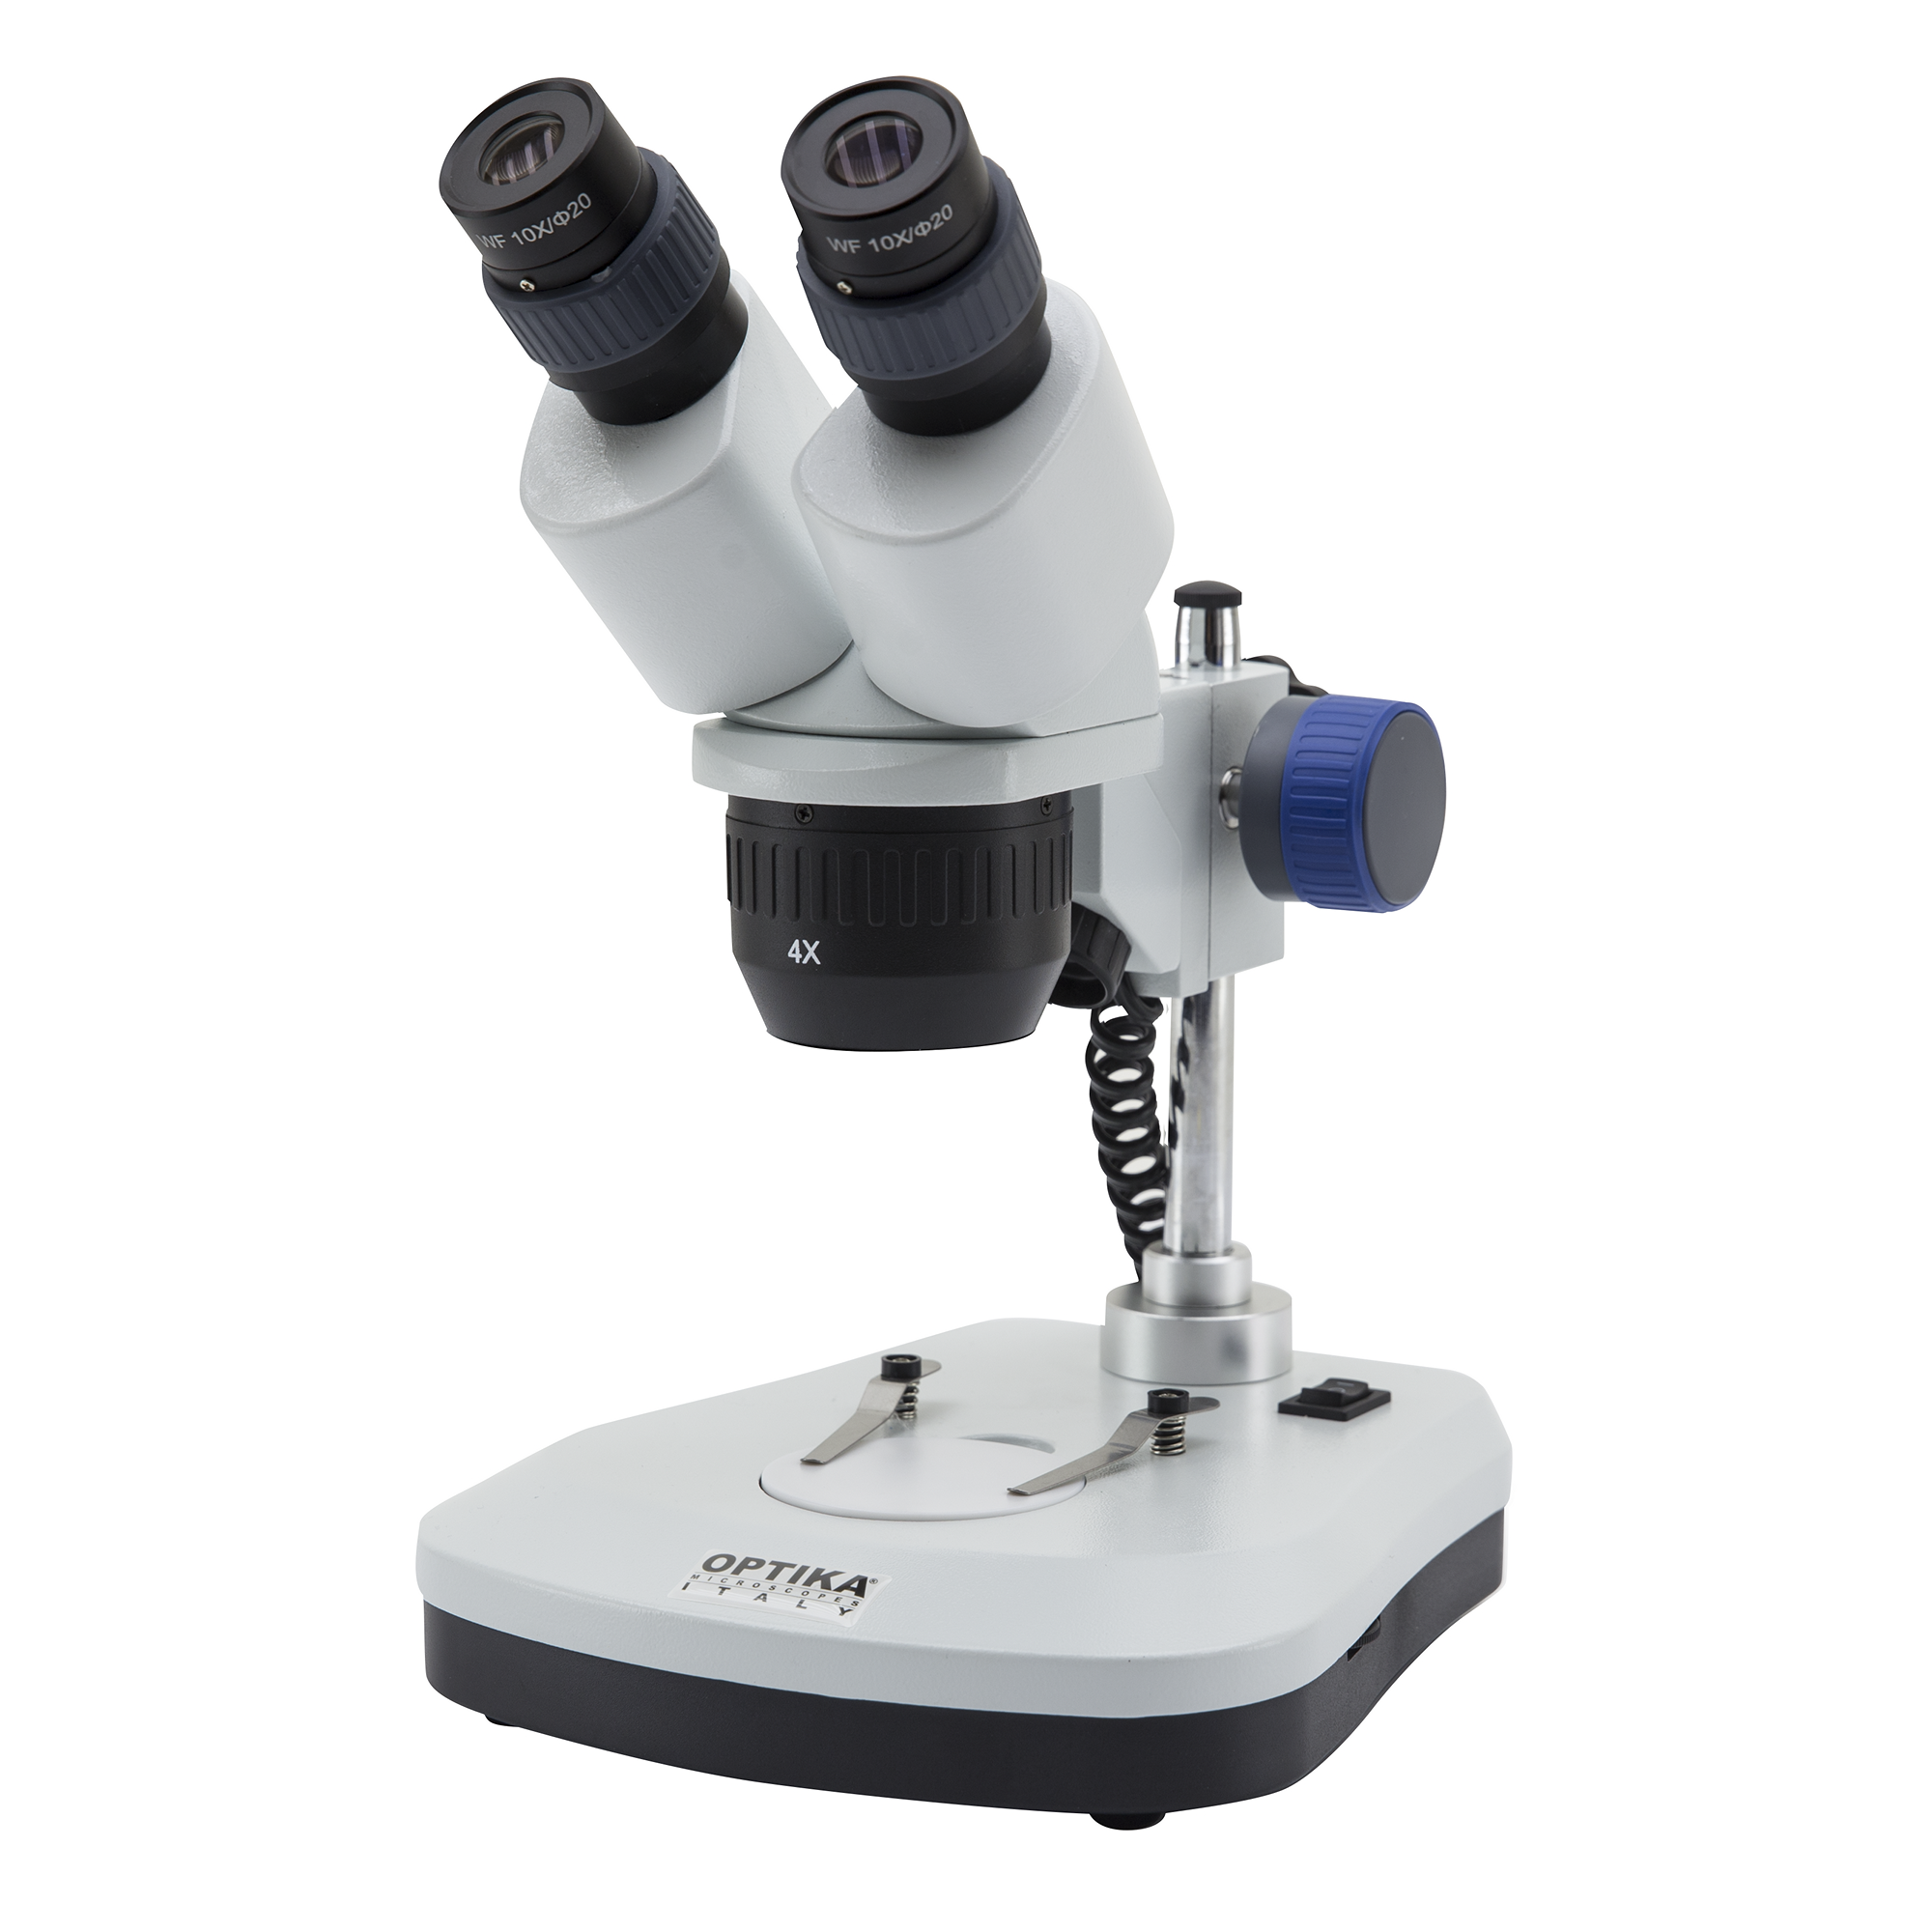 Philip Harri Sfx-31 Stereo Microscope 40